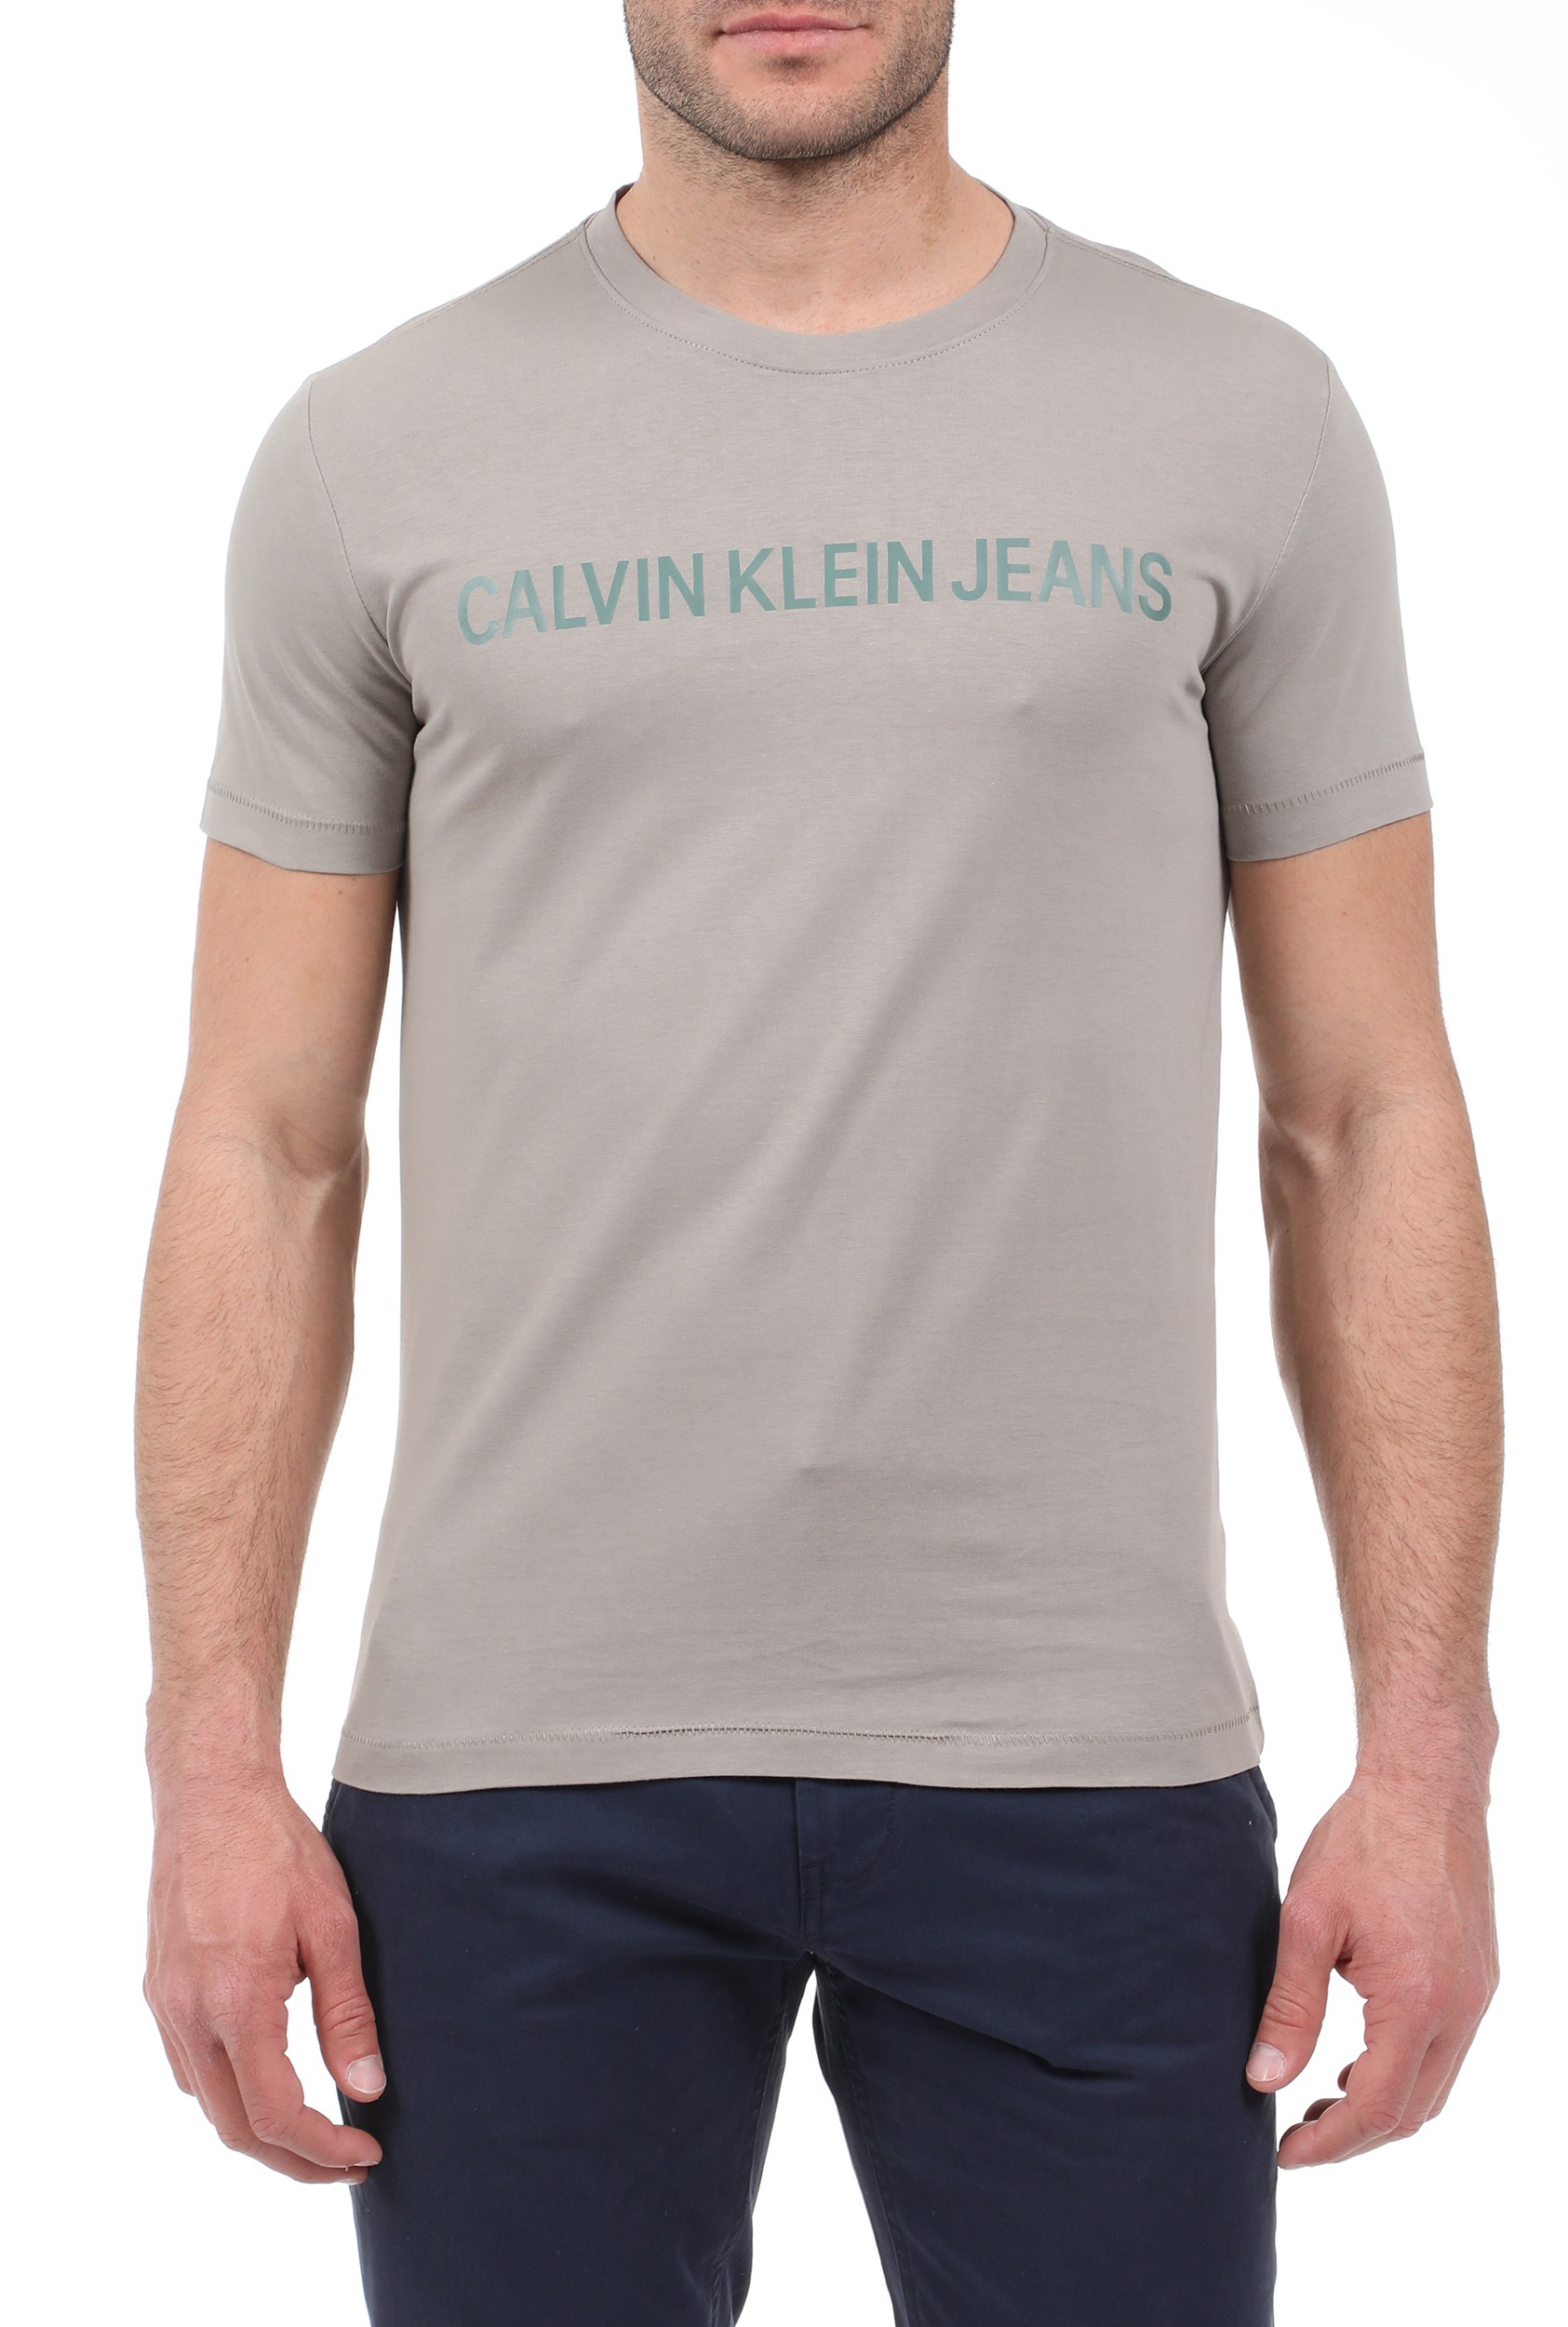 CALVIN KLEIN JEANS – Ανδρικό t-shirt CALVIN KLEIN JEANS μπεζ 1632020.0-00X5